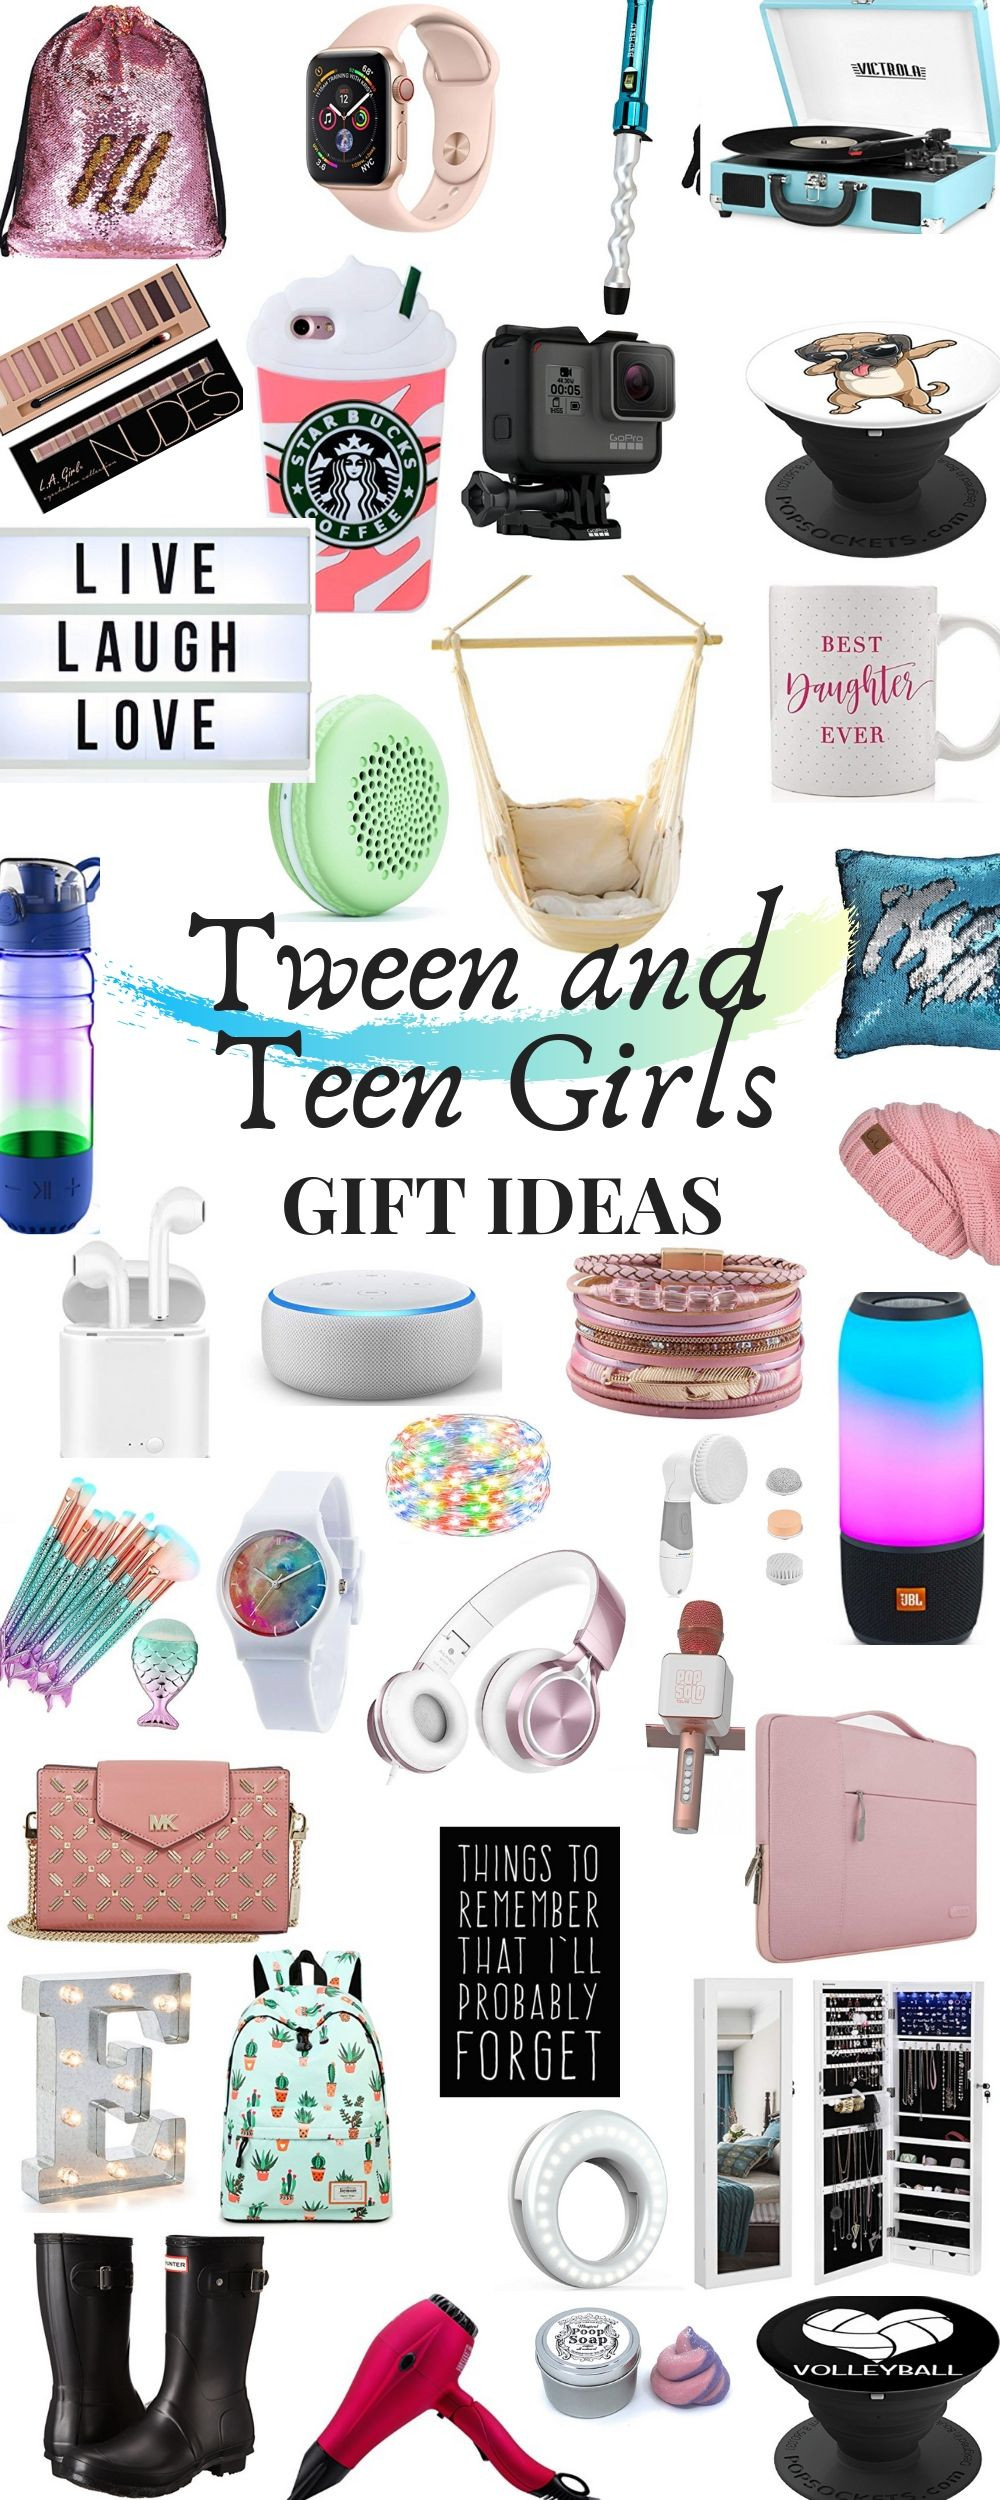 Cool Gift Ideas For Teenage Girls
 Teenage Girl and Tween Girl Gift Guide 2019